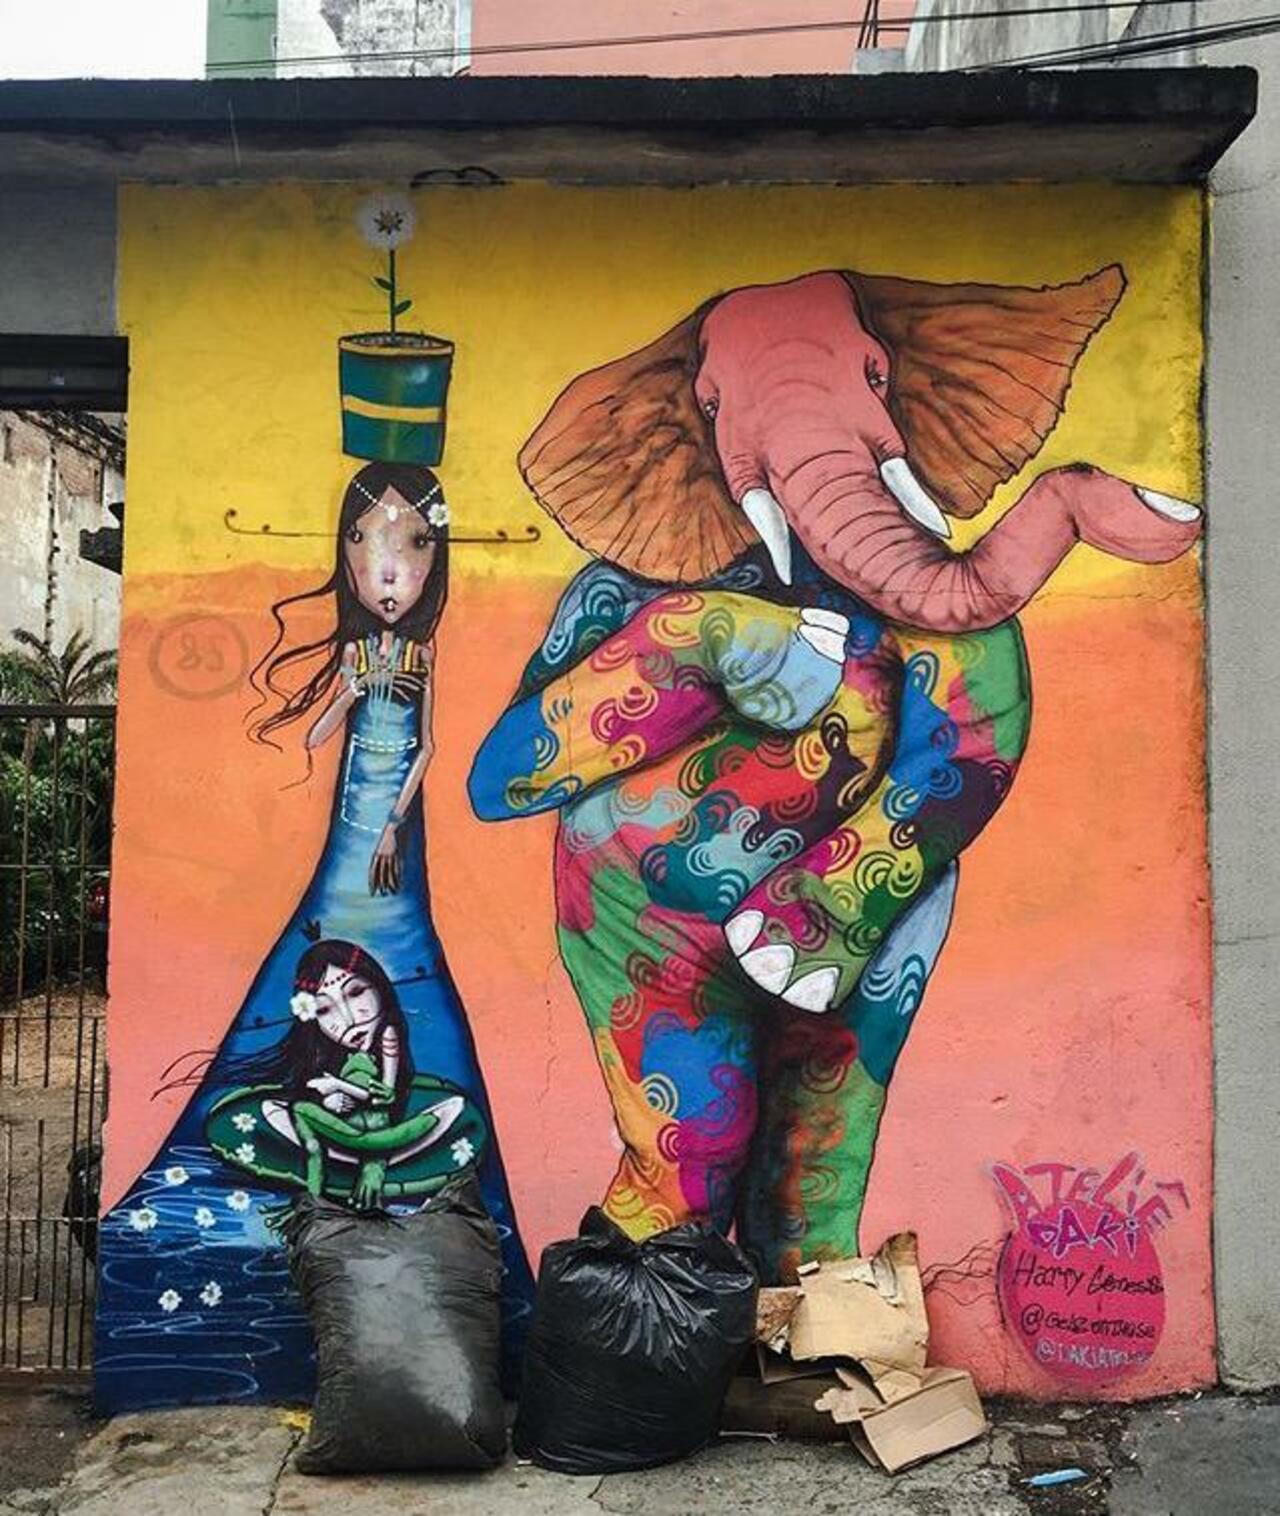 Street Art by Harry Geneis & Gelson in São Paulo #art #mural #graffiti #streetart http://t.co/SlLbhuMZfD … … …… … http://twitter.com/charlesjackso14/status/648021465040863233